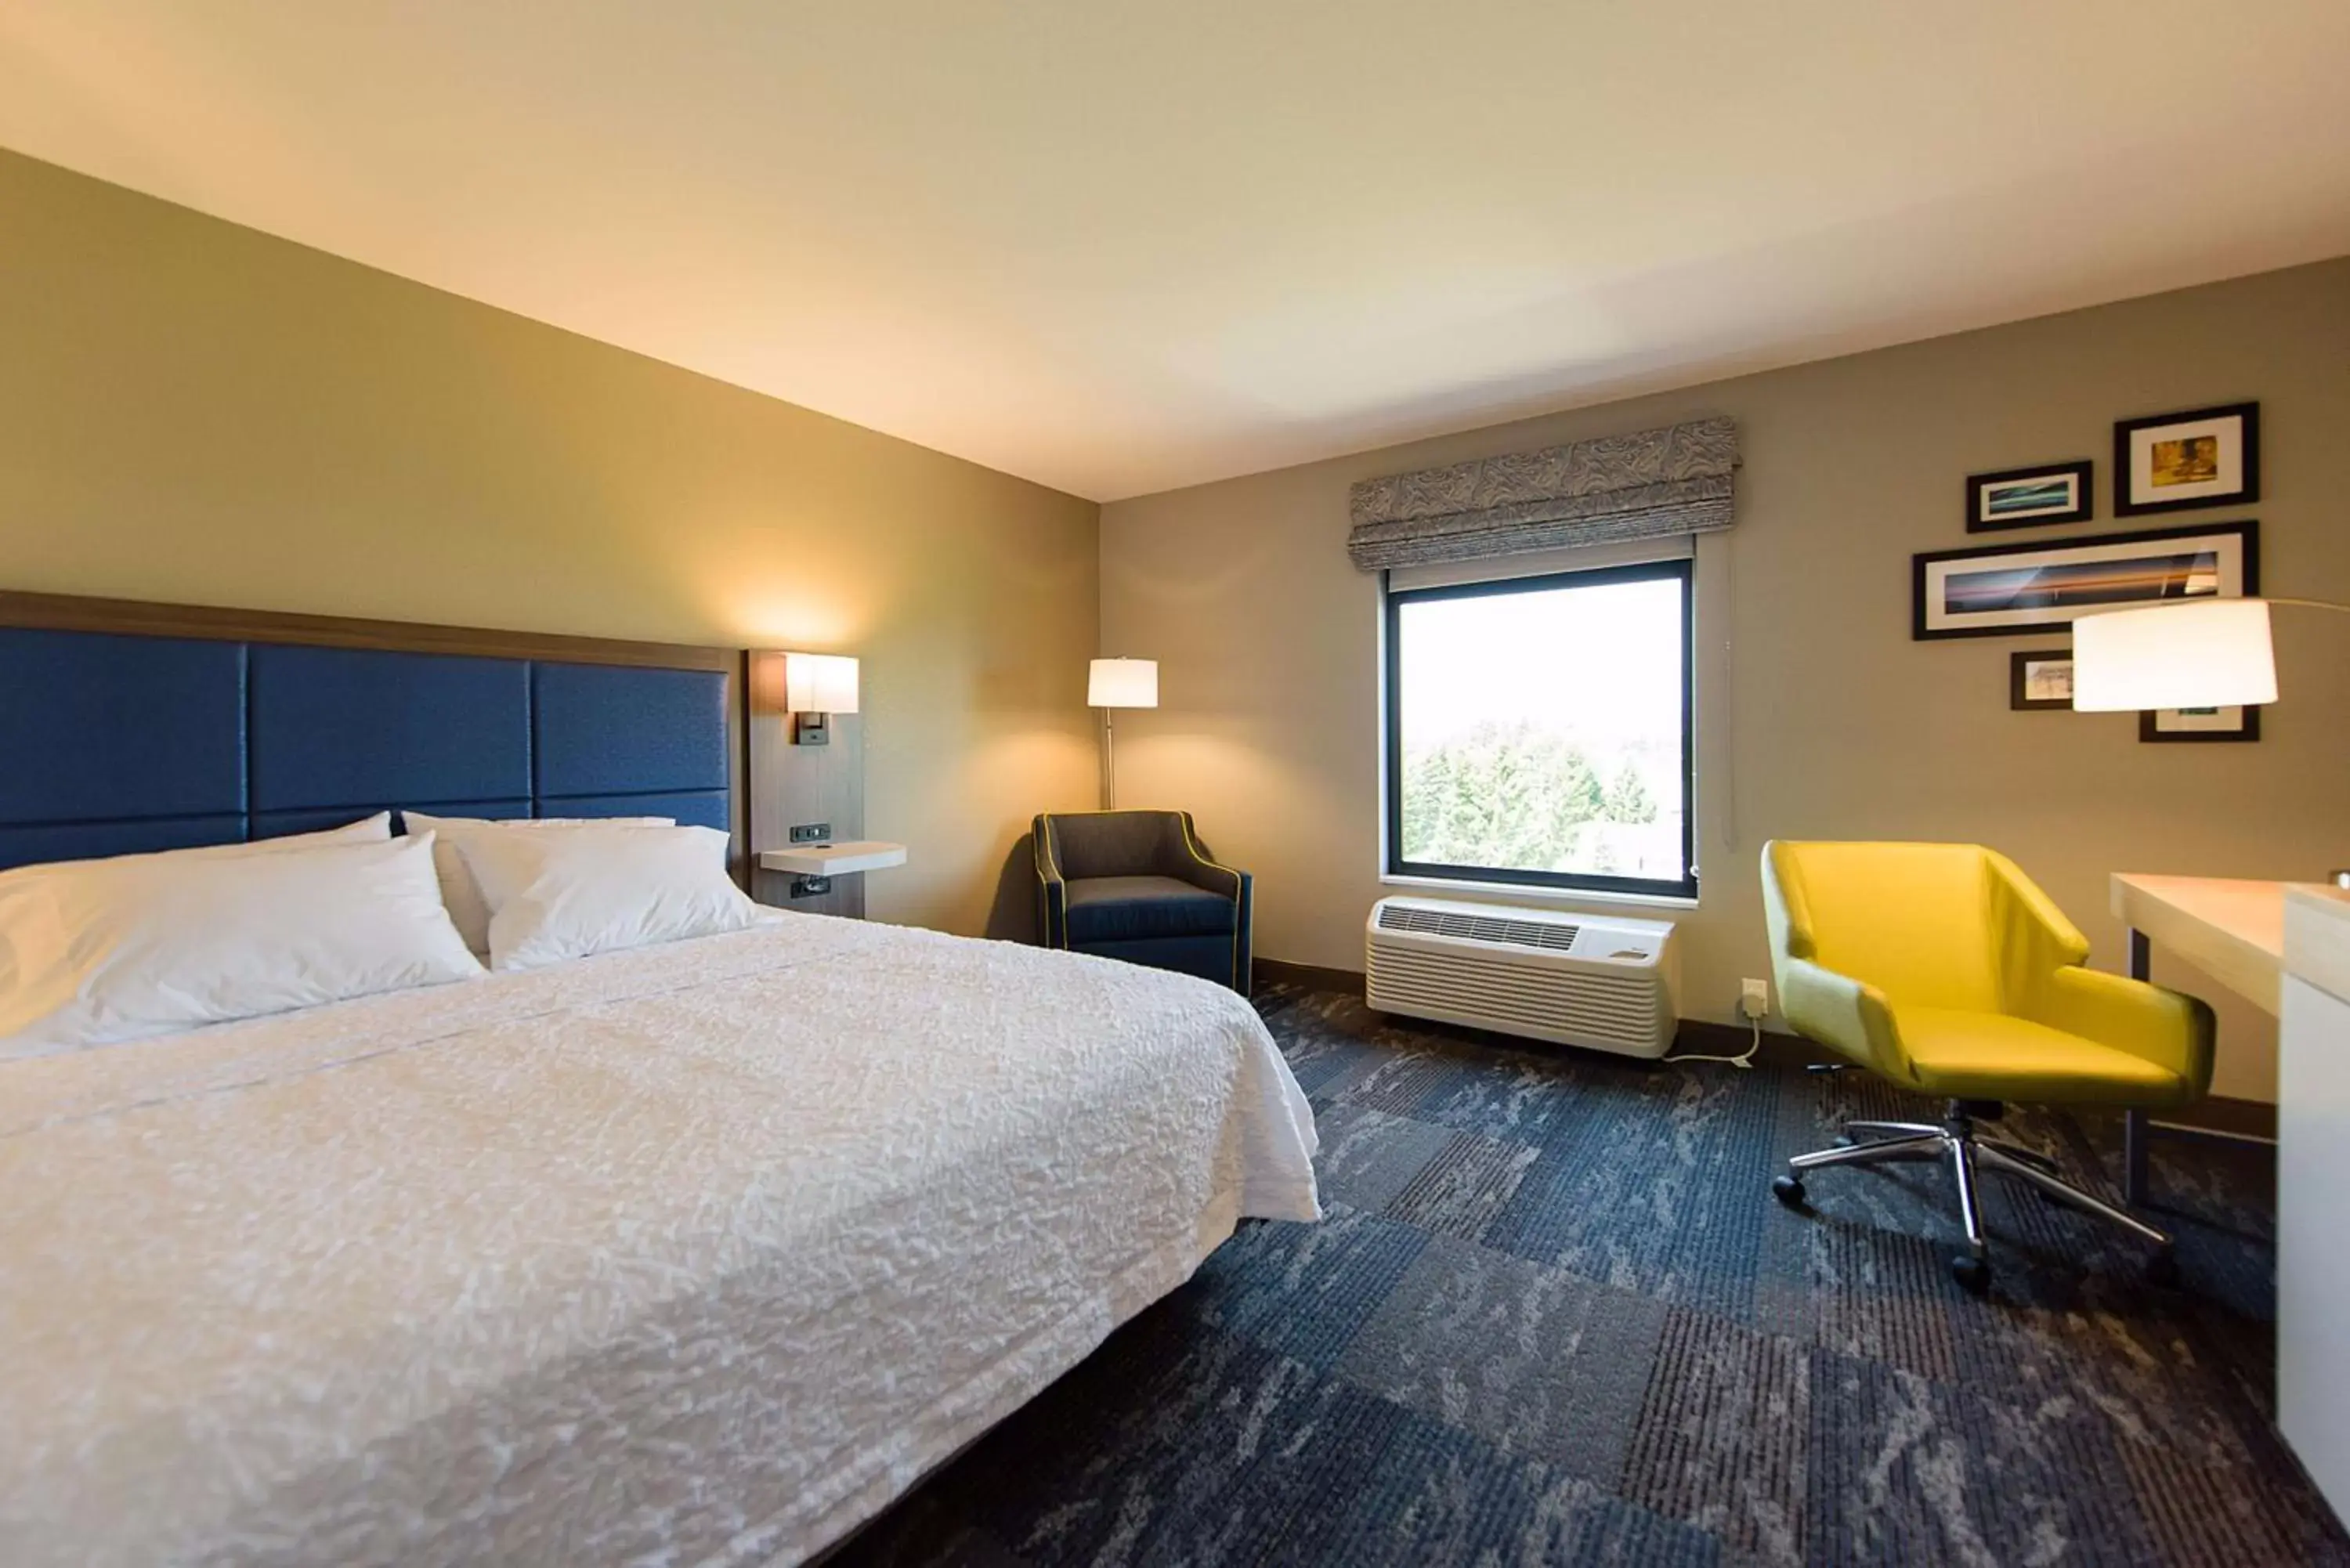 Bedroom in Hampton Inn Superior Duluth, Wi